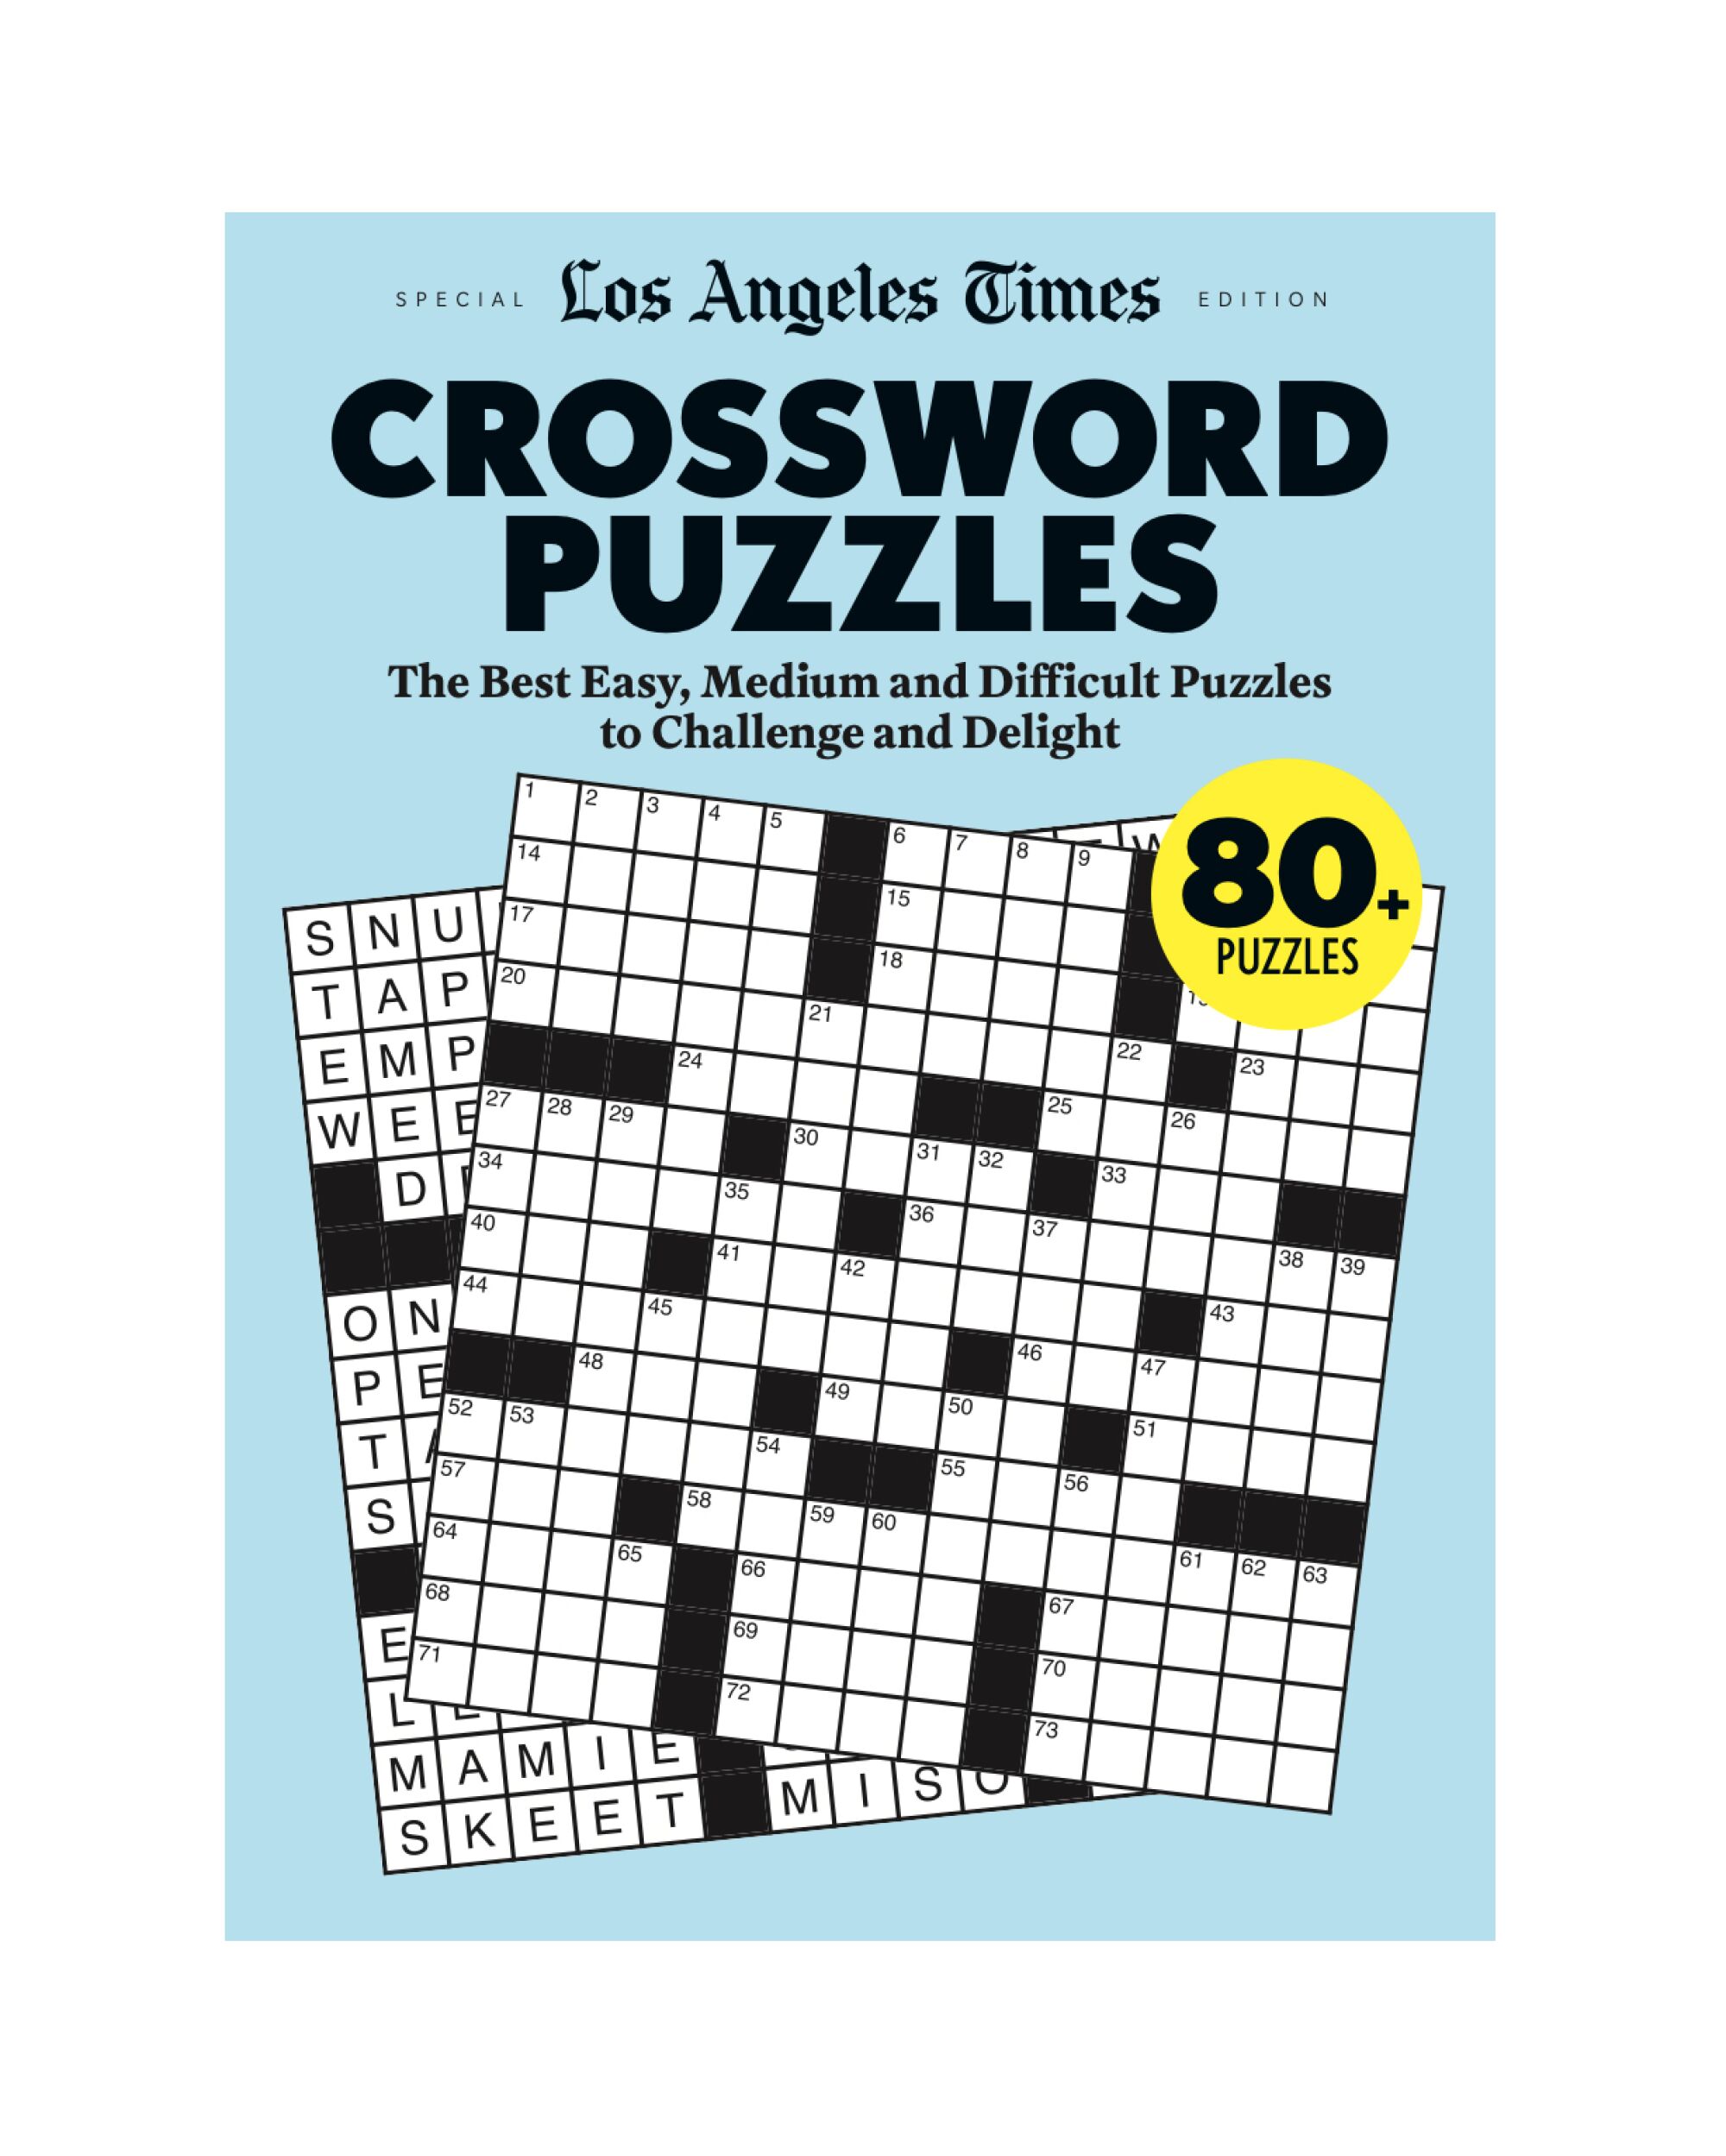 Los Angeles Times crossword puzzle book 